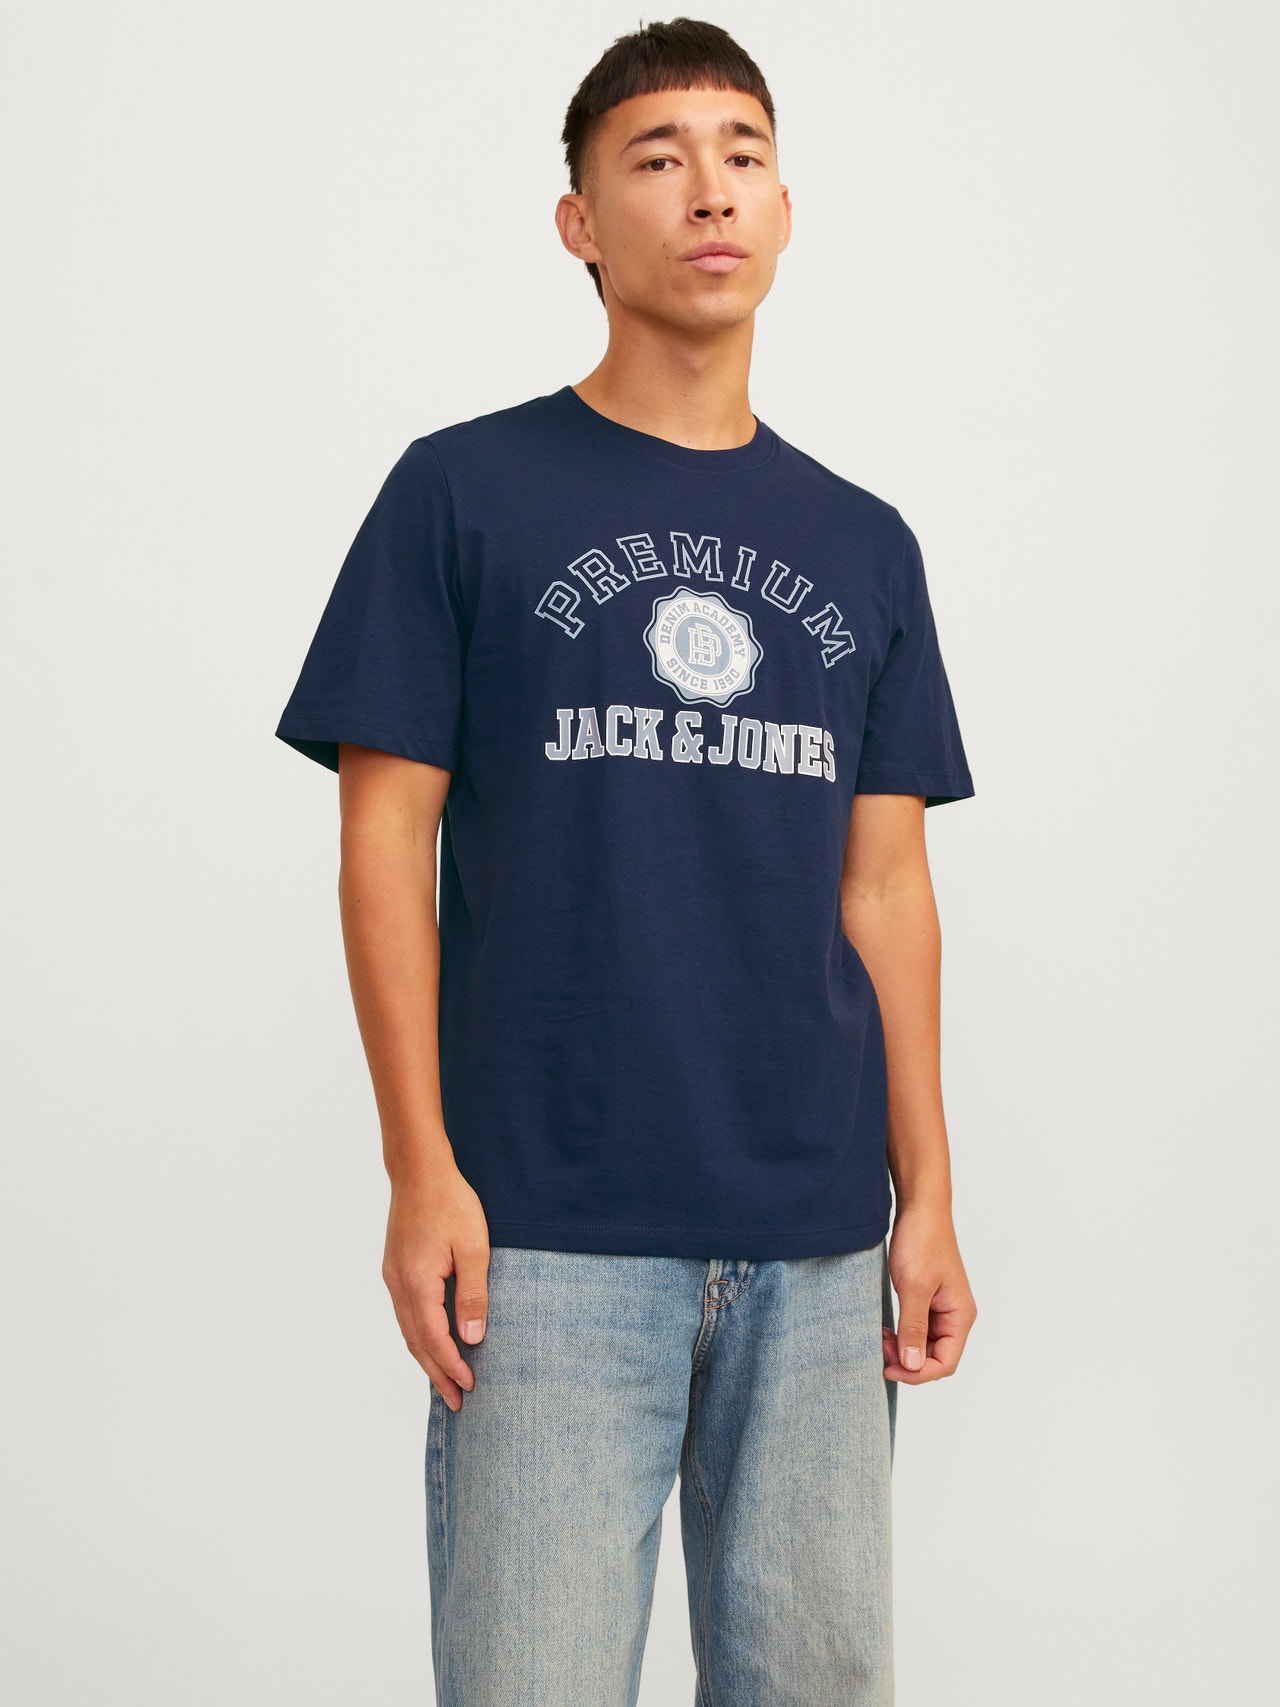 Jack & Jones T-shirt Stampato Girocollo -Navy Blazer - 12255163